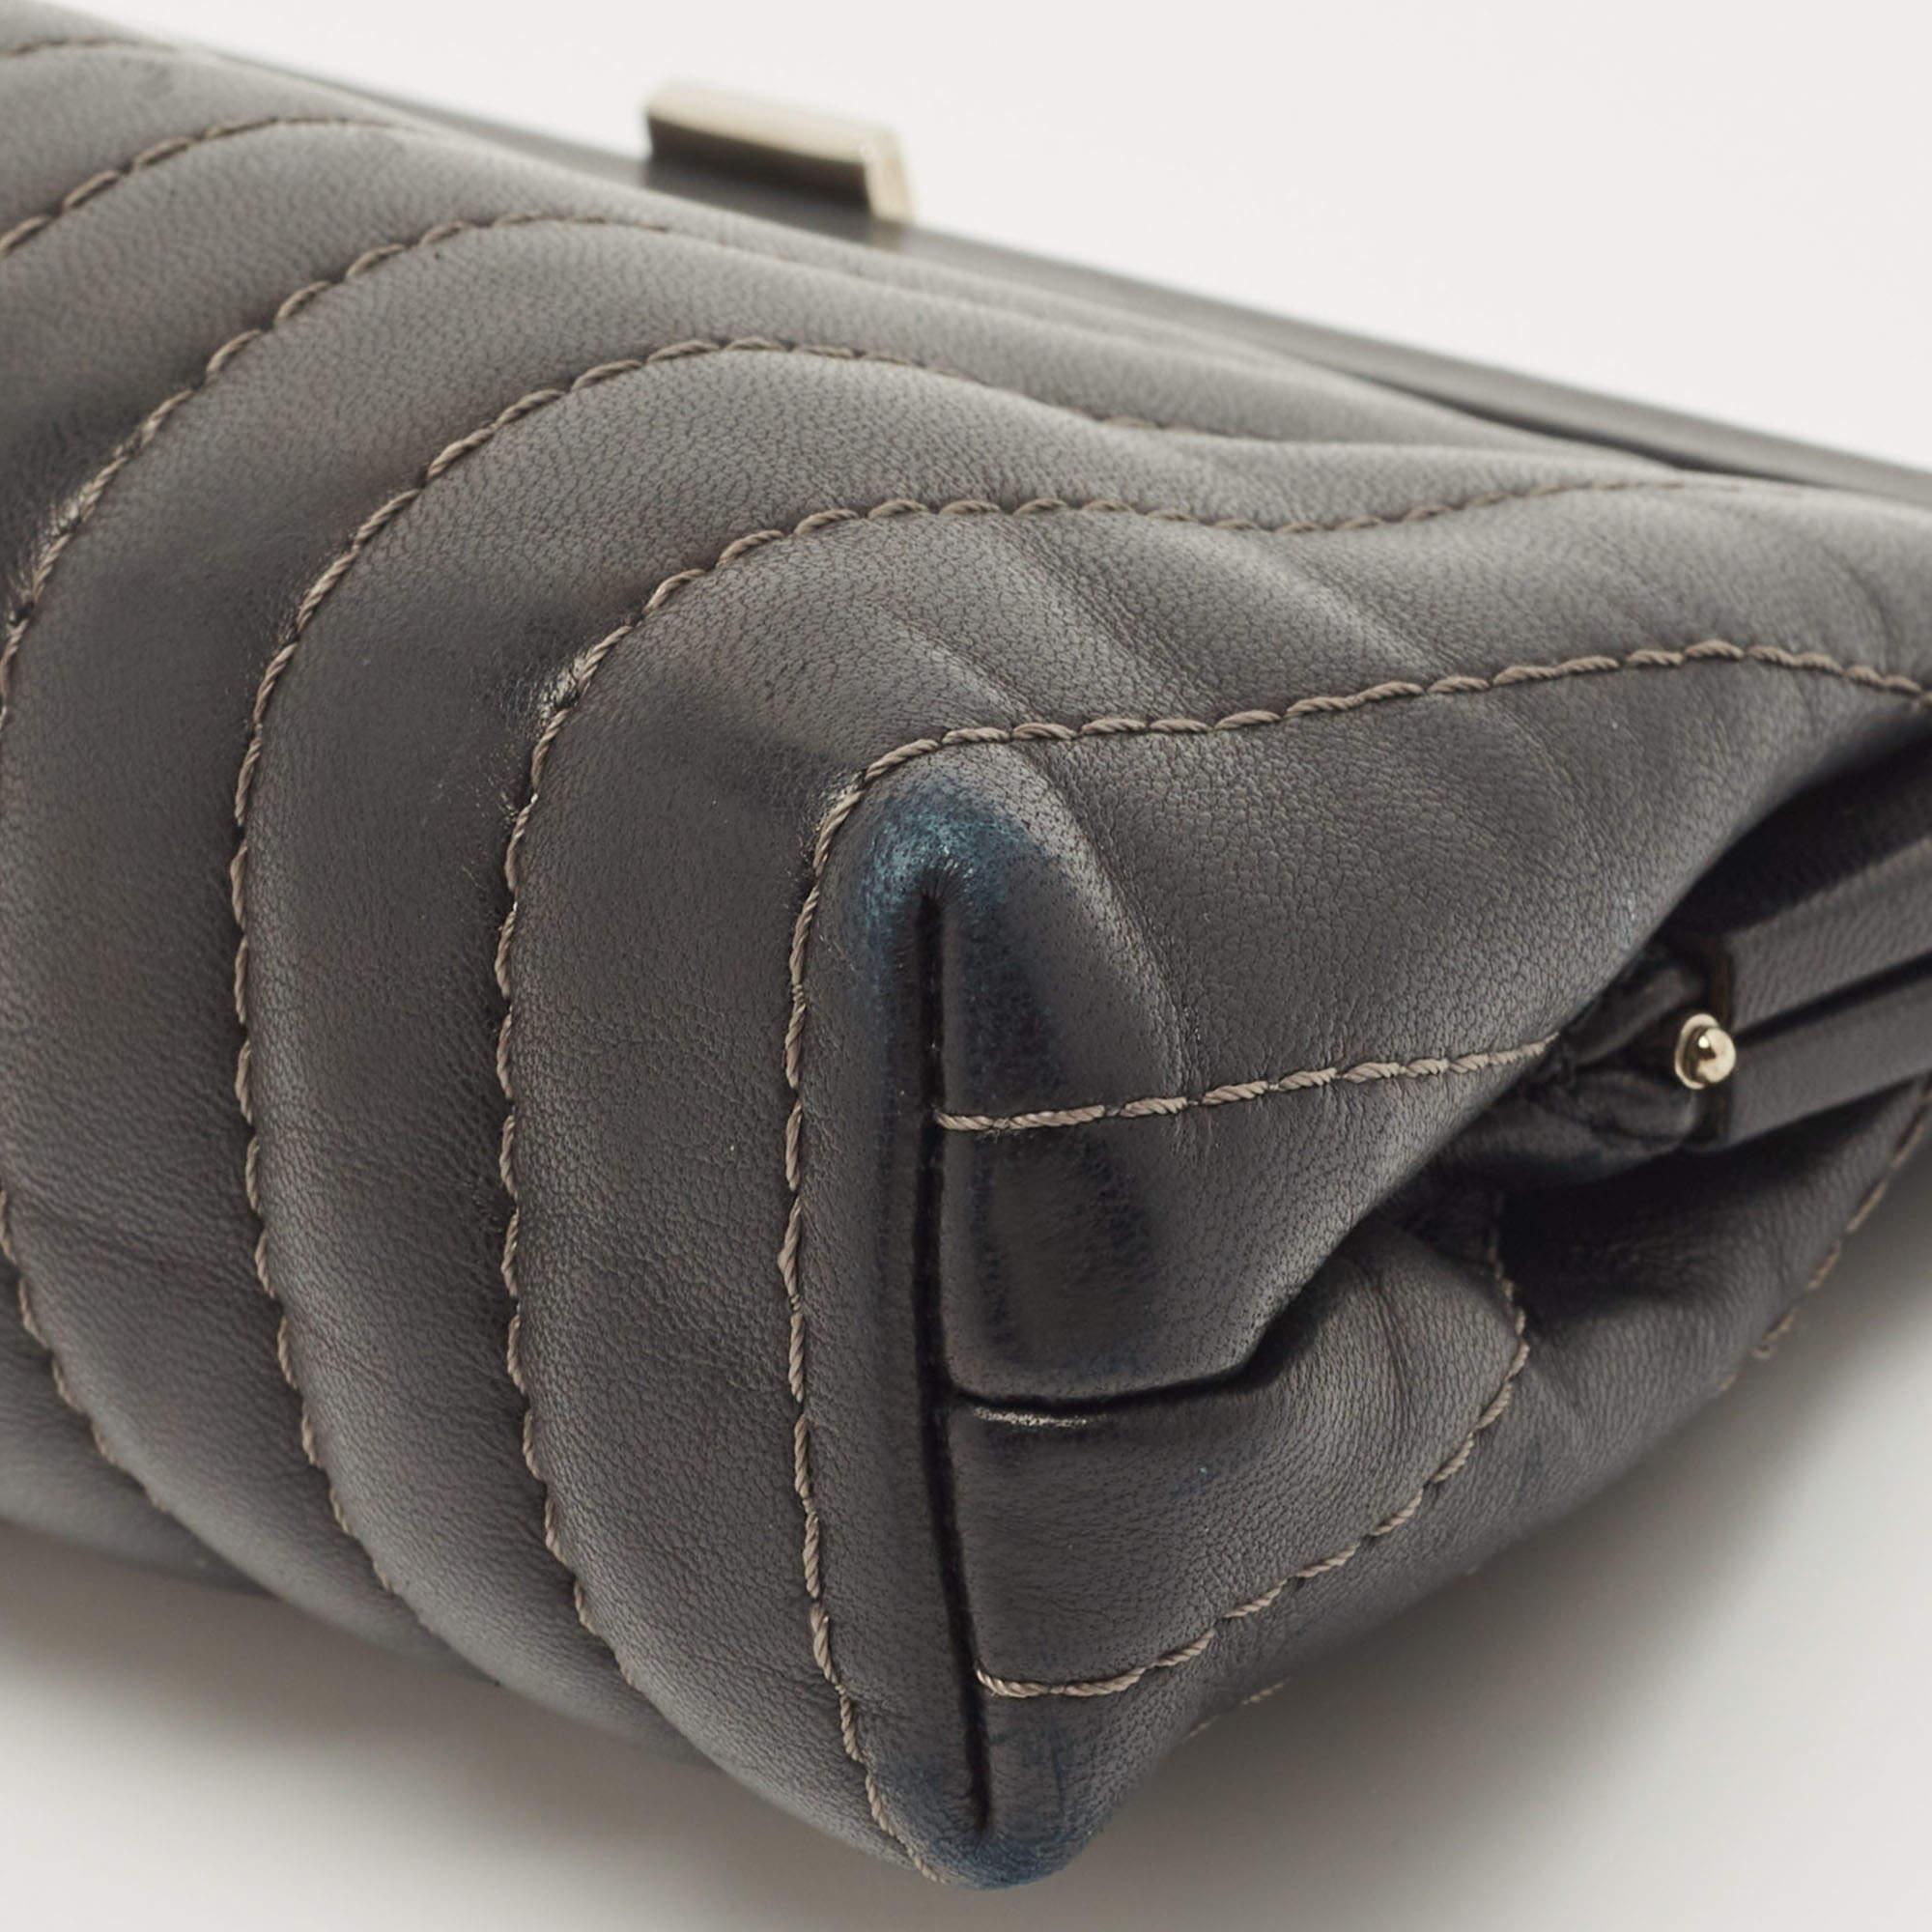 Chanel Black Vertical Stitch Leather Vintage Clutch For Sale 9